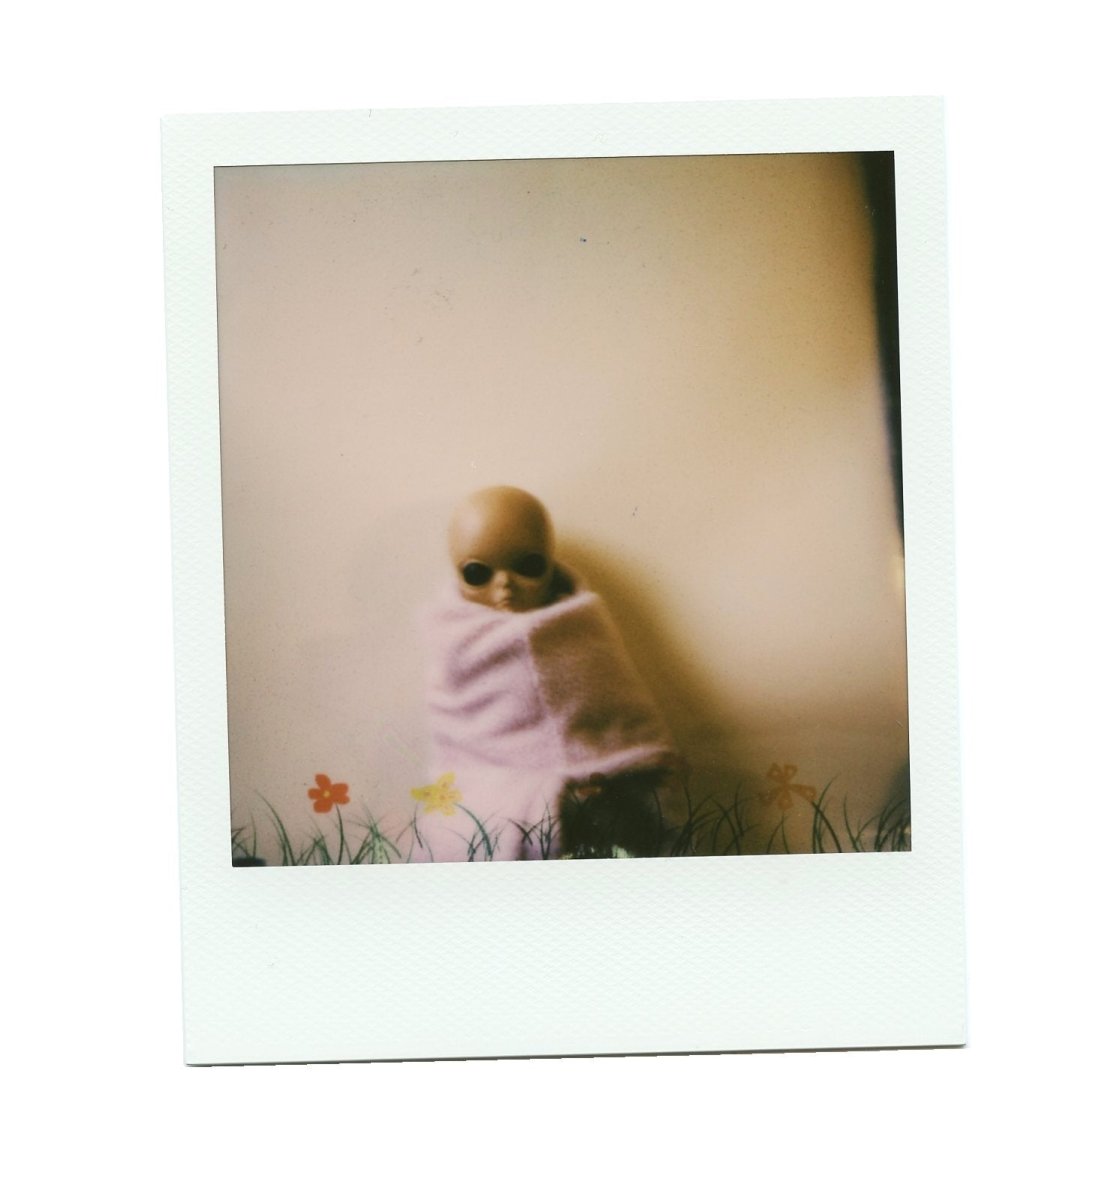 BKIFI Polaroid Adapter - Flowers Set - Analogue Wonderland - 4